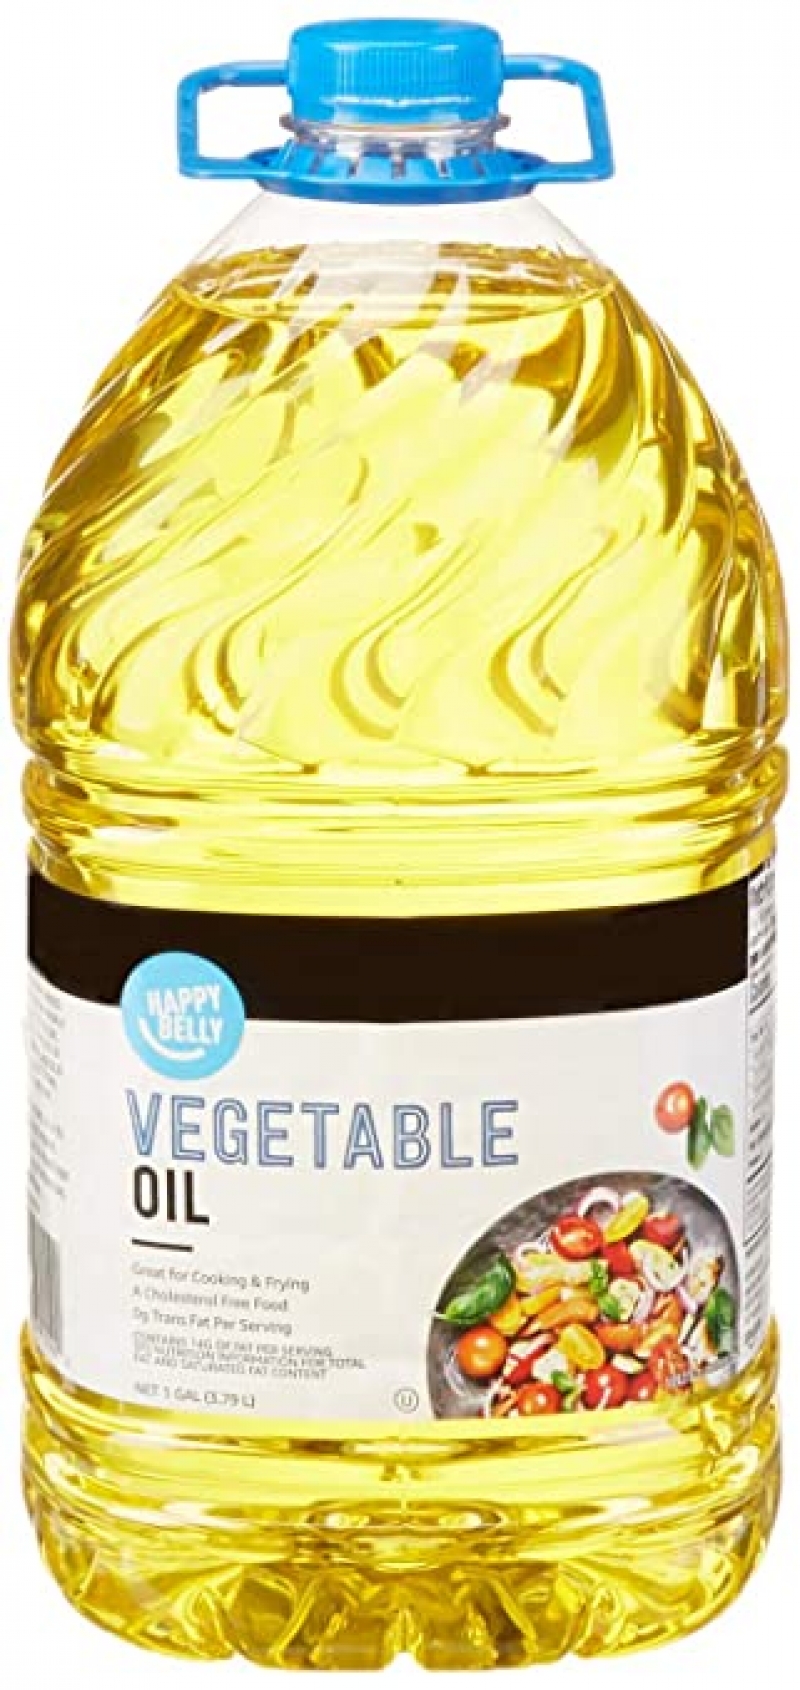 ihocon: [Amazon自家品牌] Happy Belly Vegetable Oil, 1 gallon (128 Fl Oz)蔬菜油